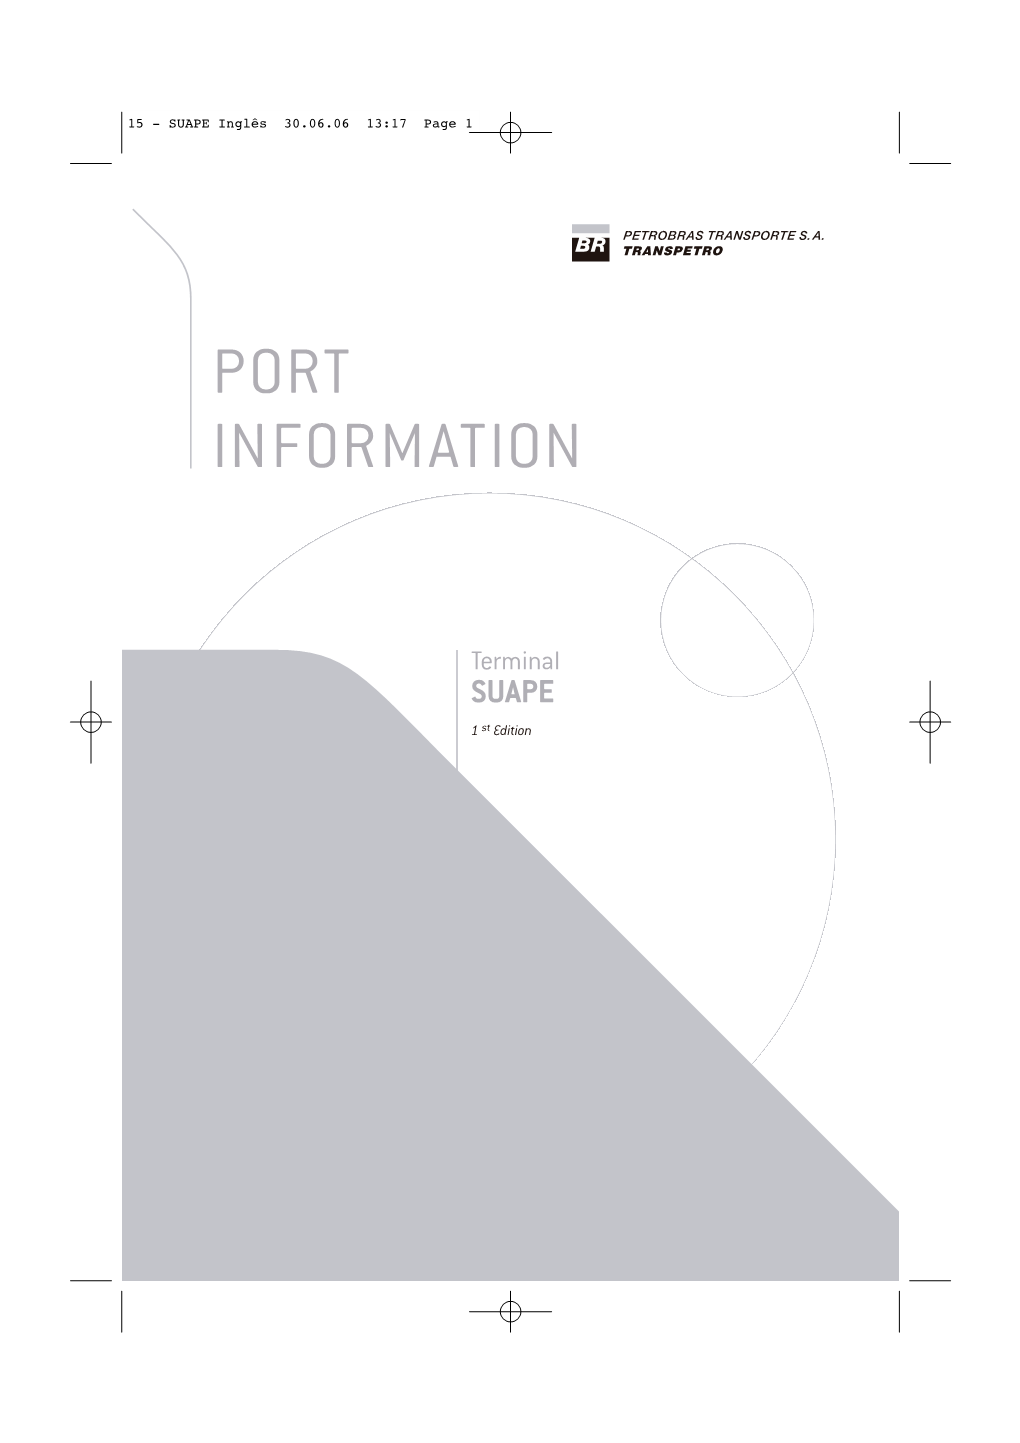 Port Information